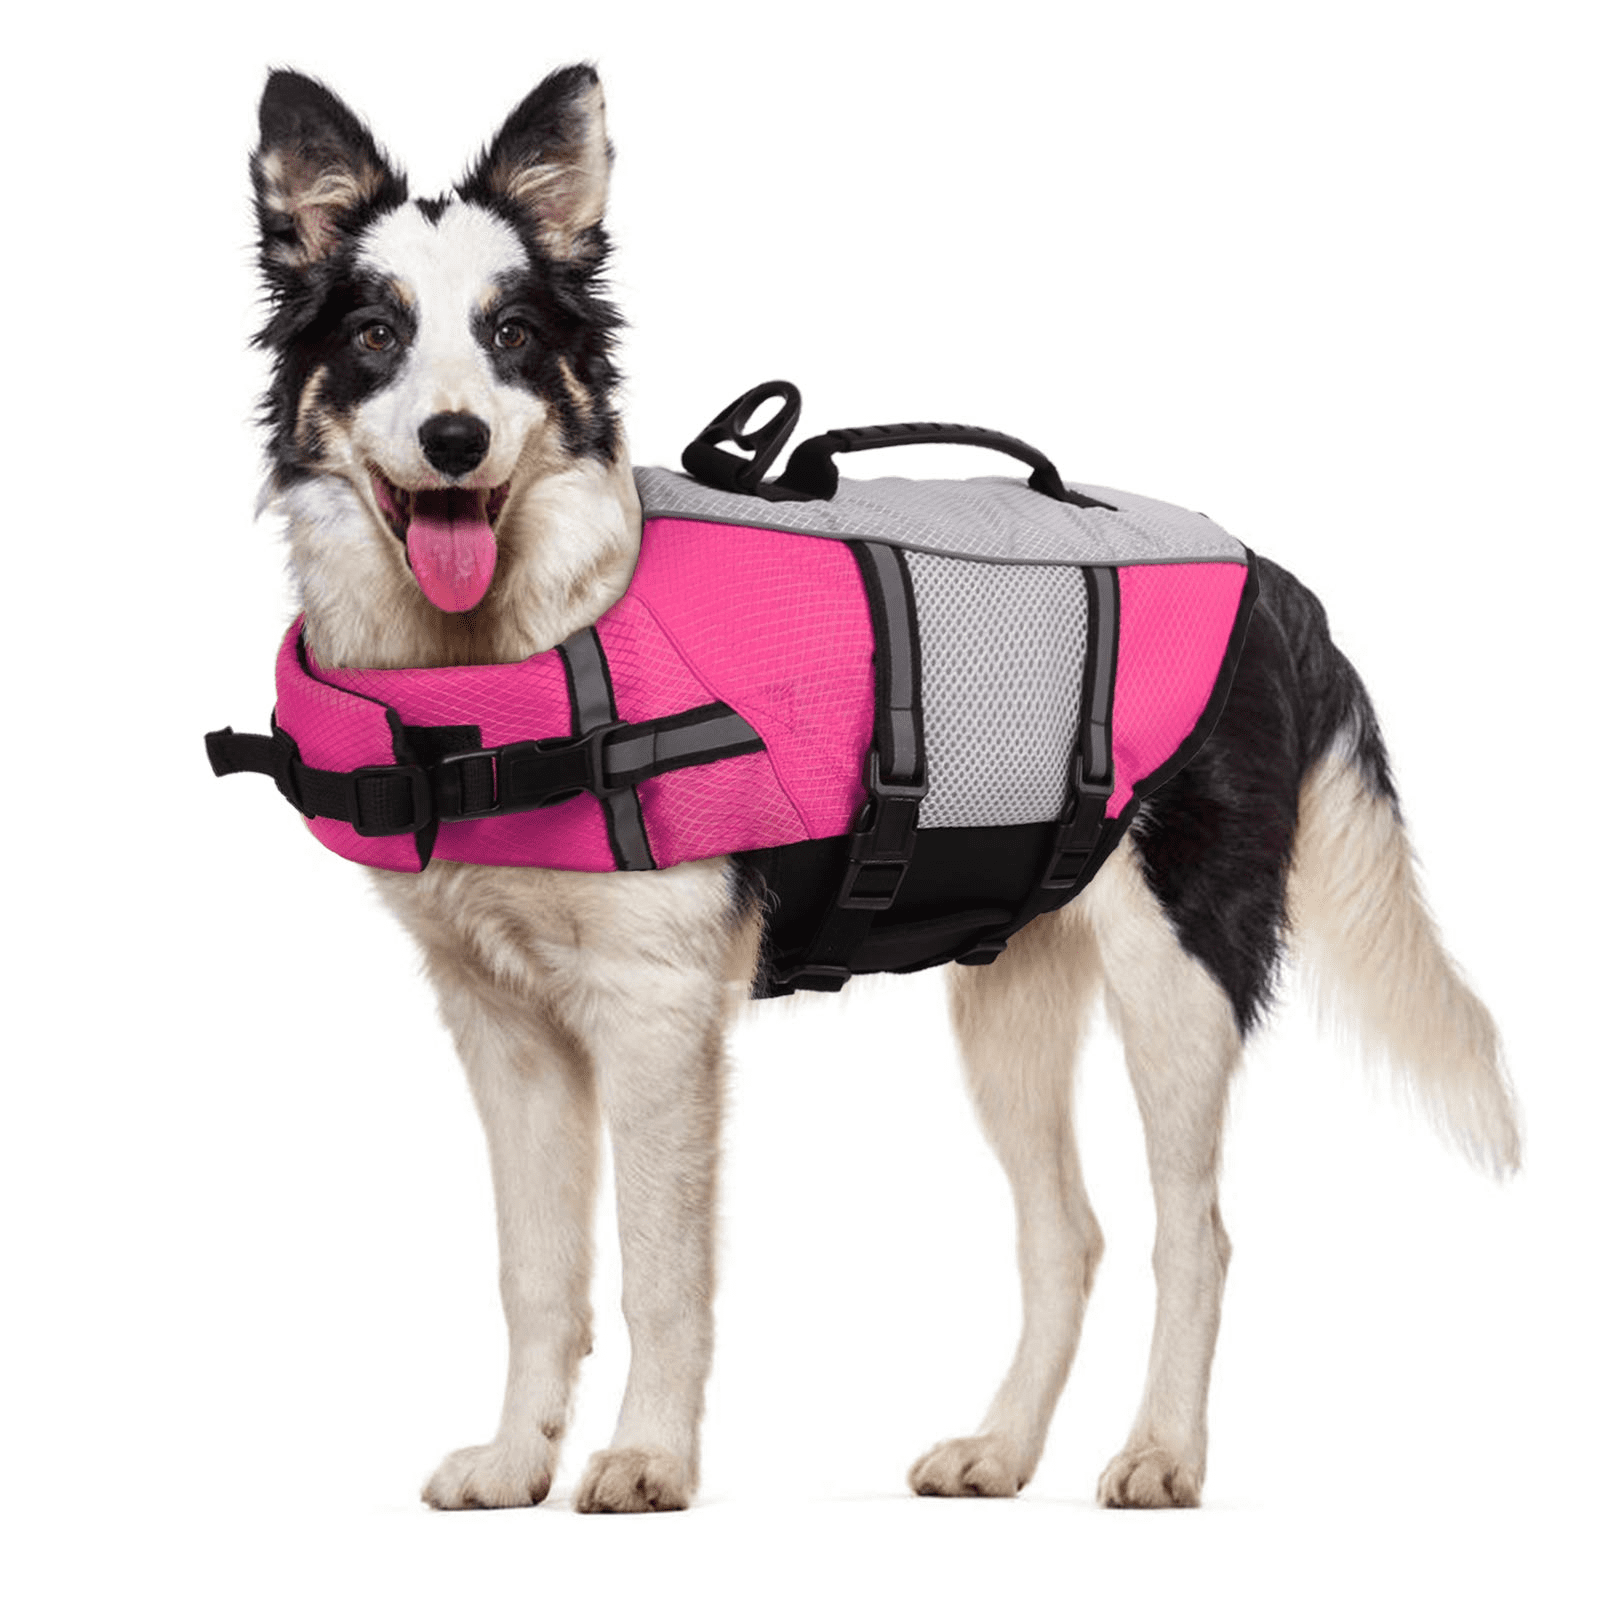 Dog Life Jacket,Pet Floatation Life Vest,Adjustable Dog Lifejacket,rosered,S 